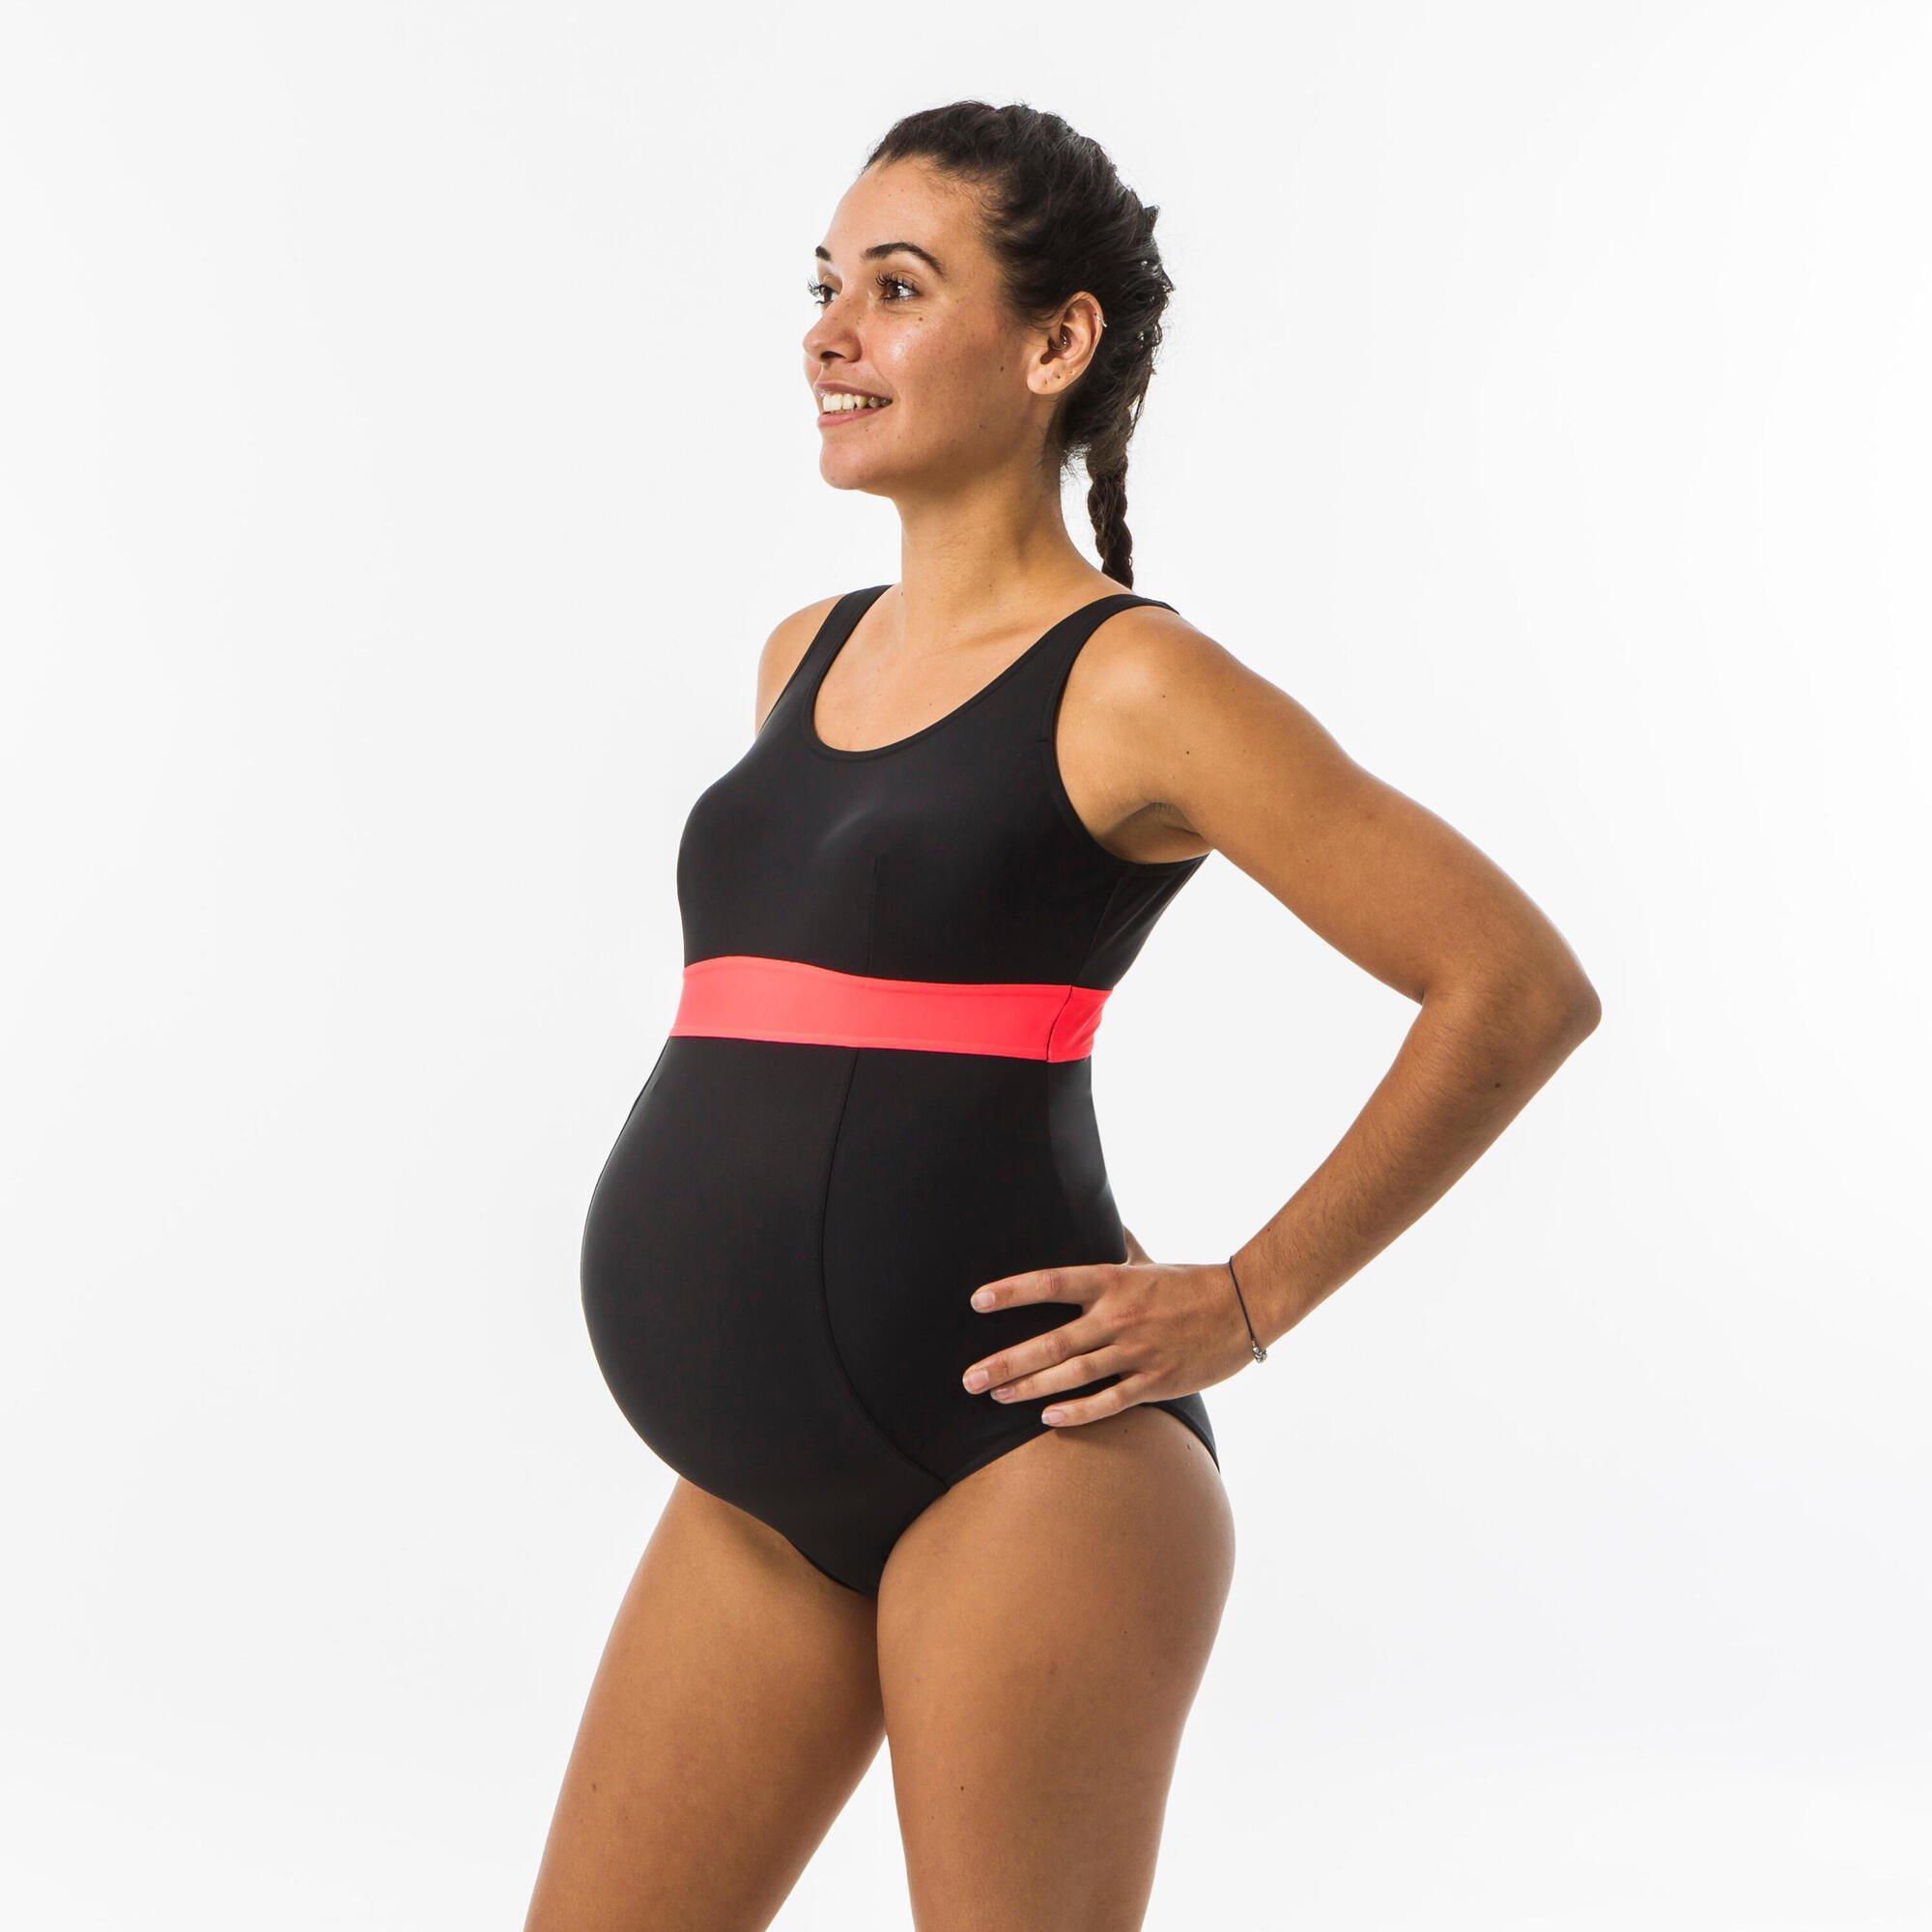 Decathlon Romane 100 Maternity Swimsuit 1-Piece